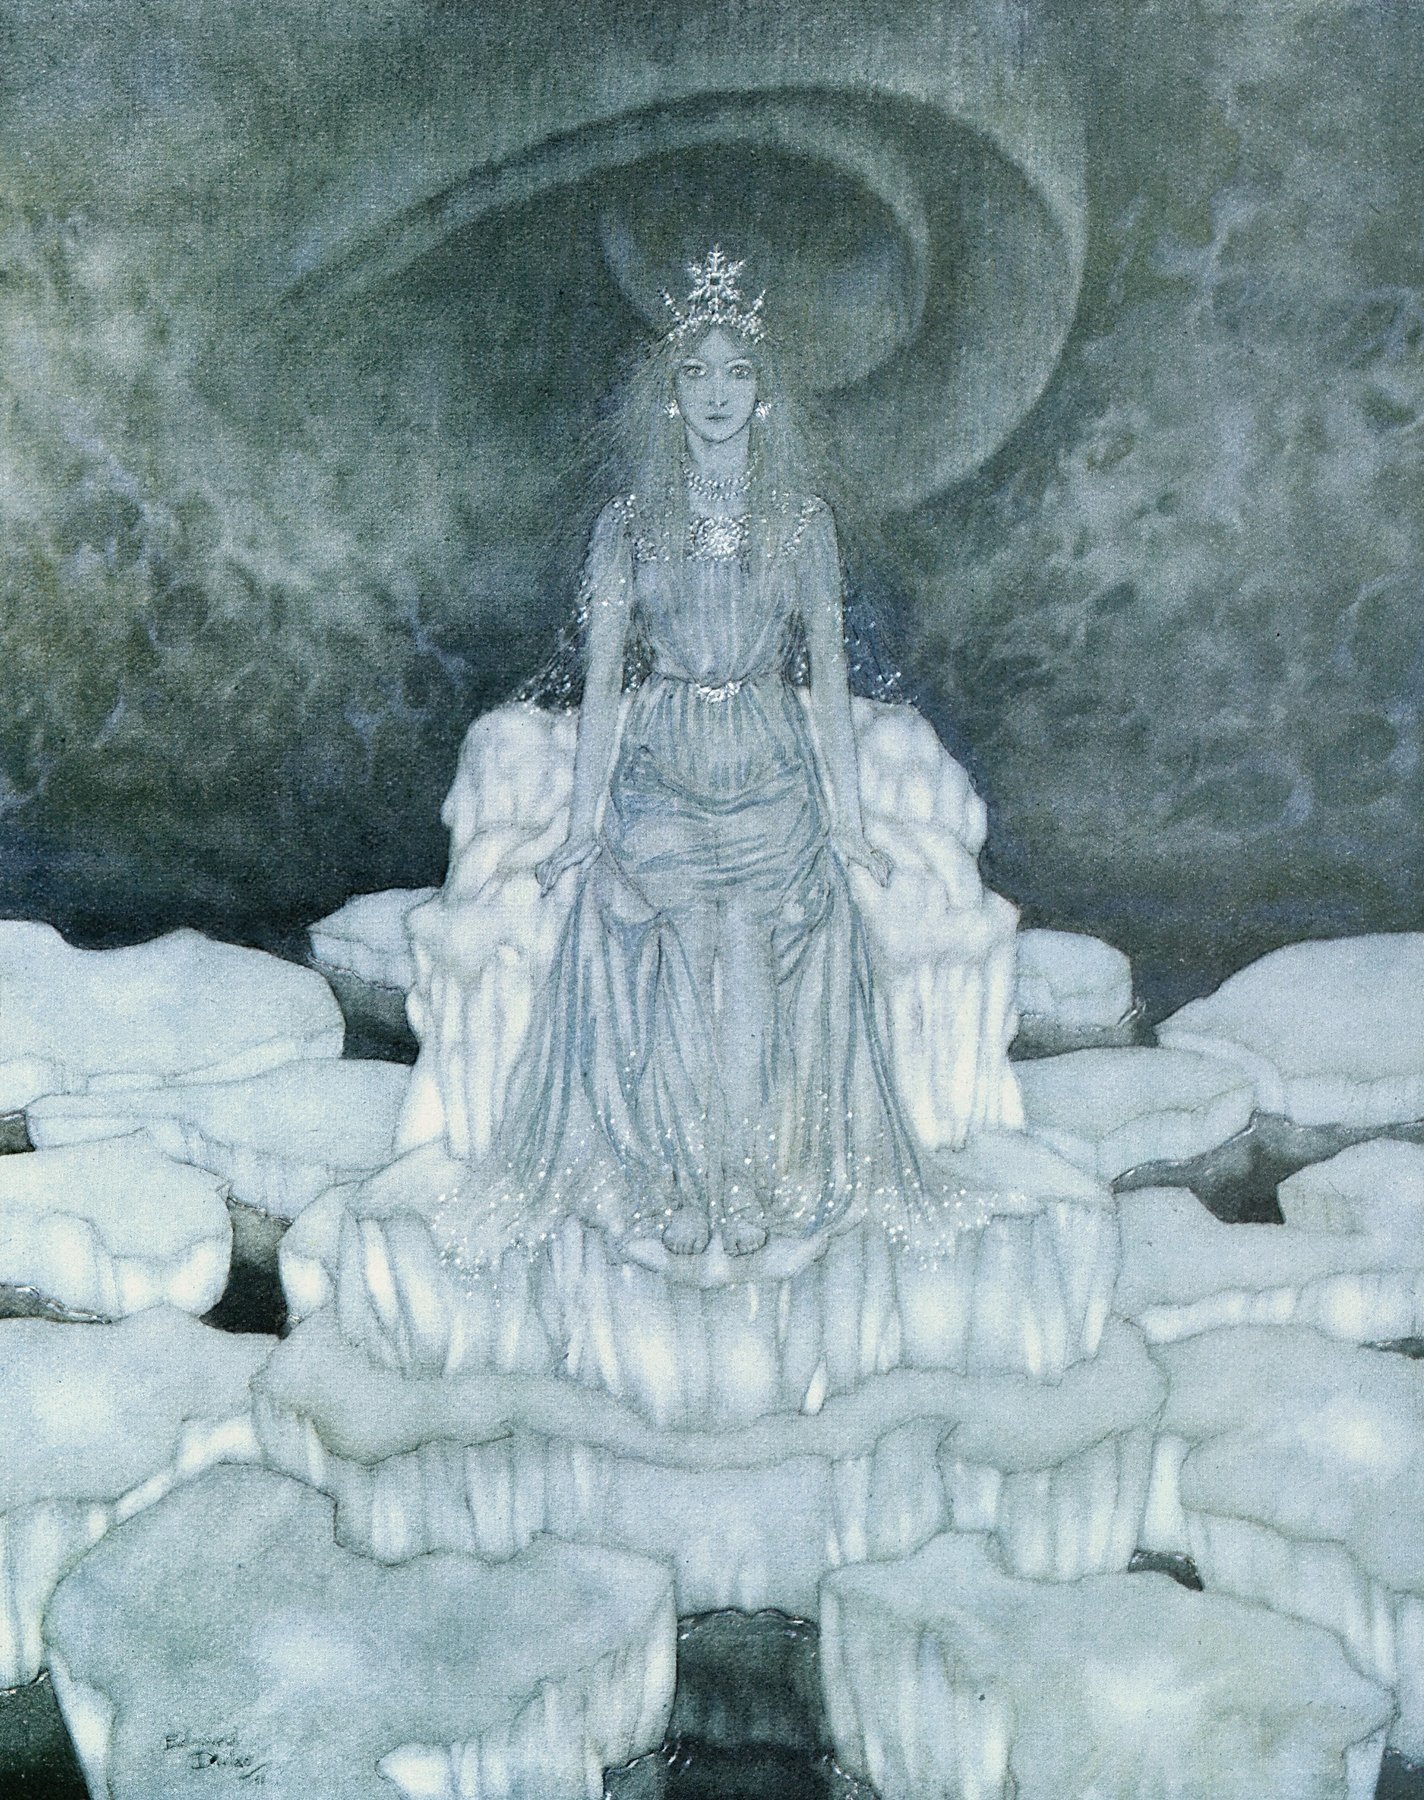 The Snow Queen Pl 7 (1911)